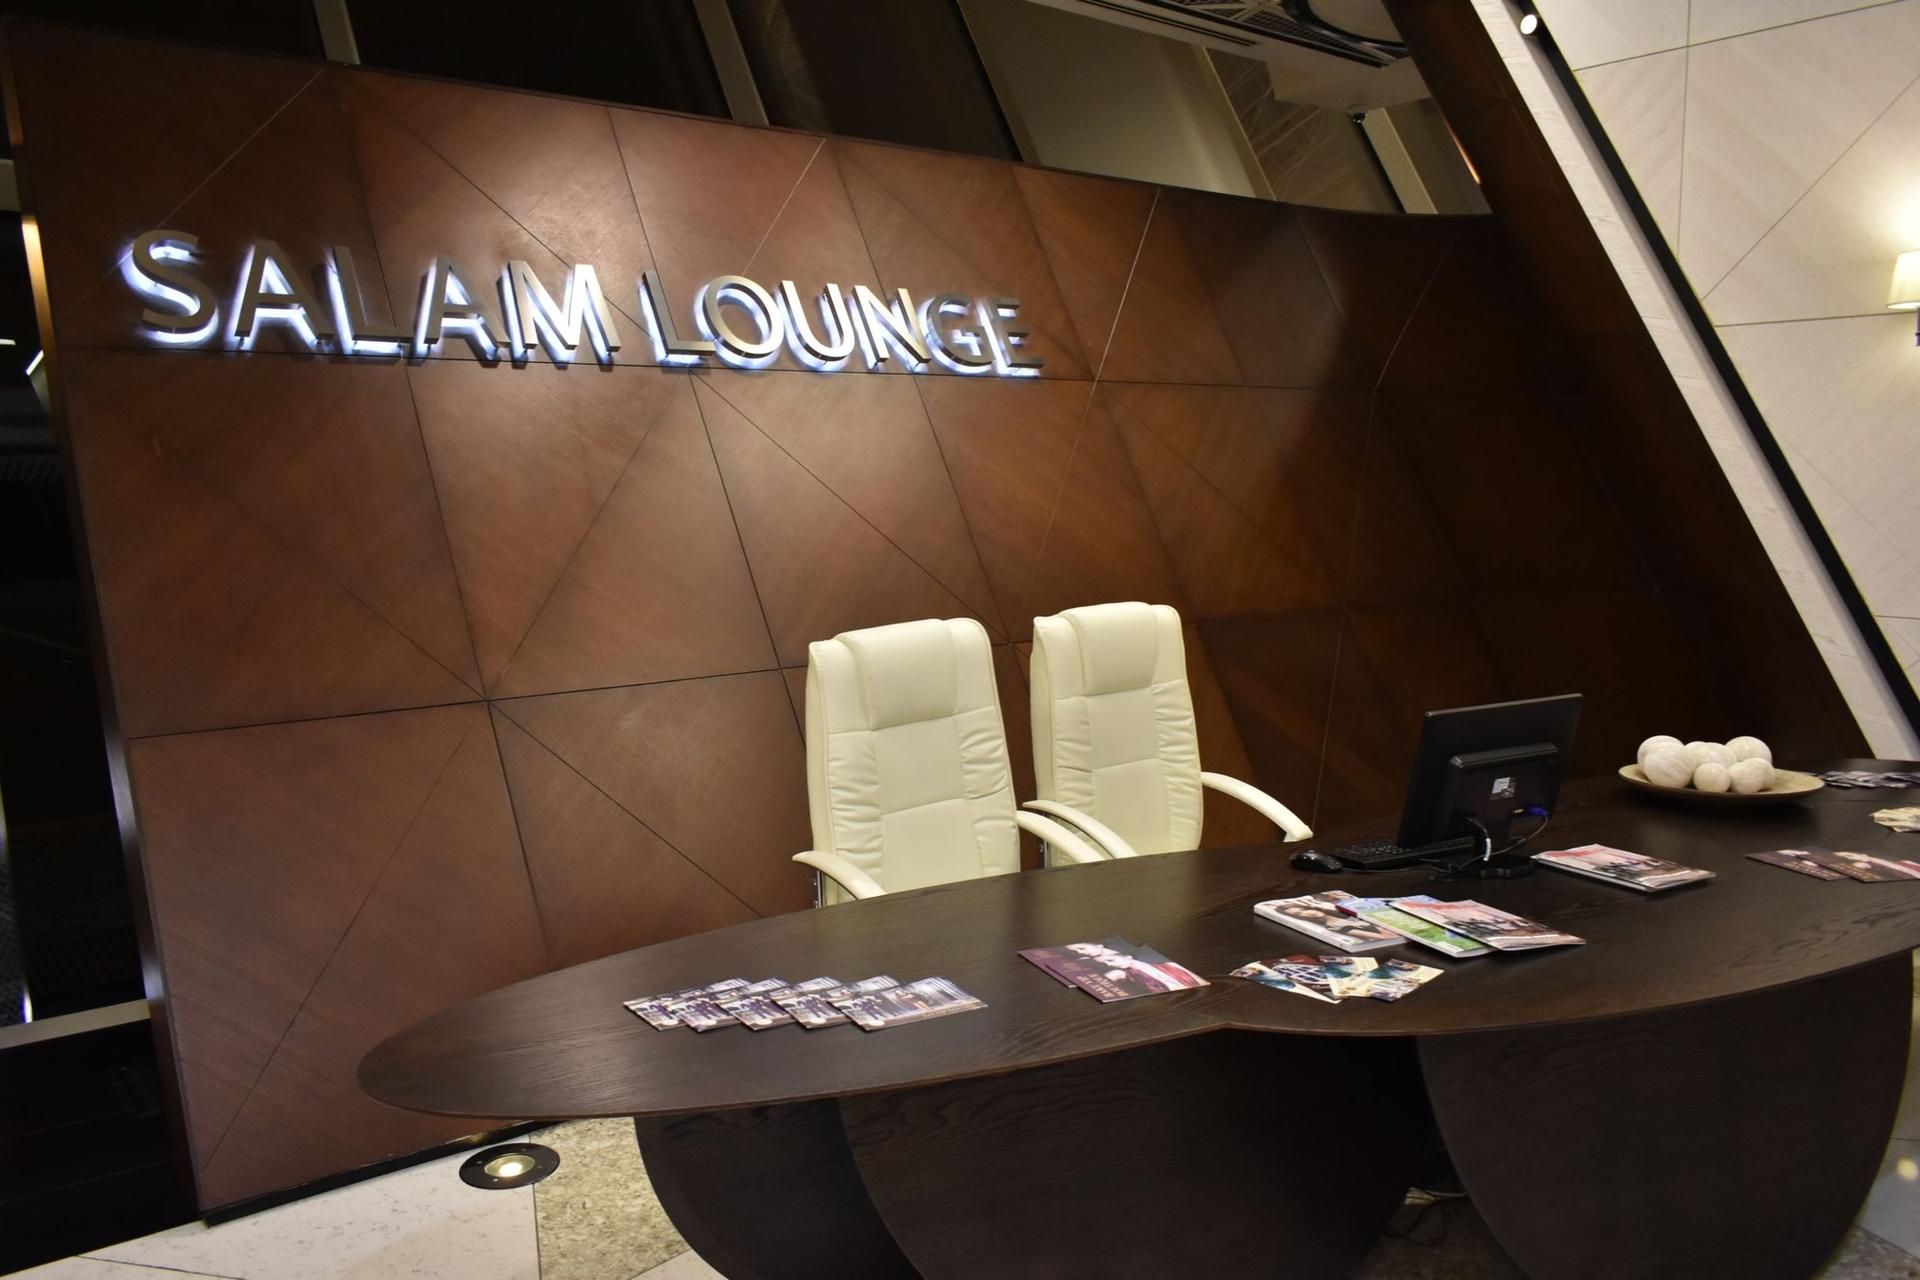 Salam Lounge image 15 of 16